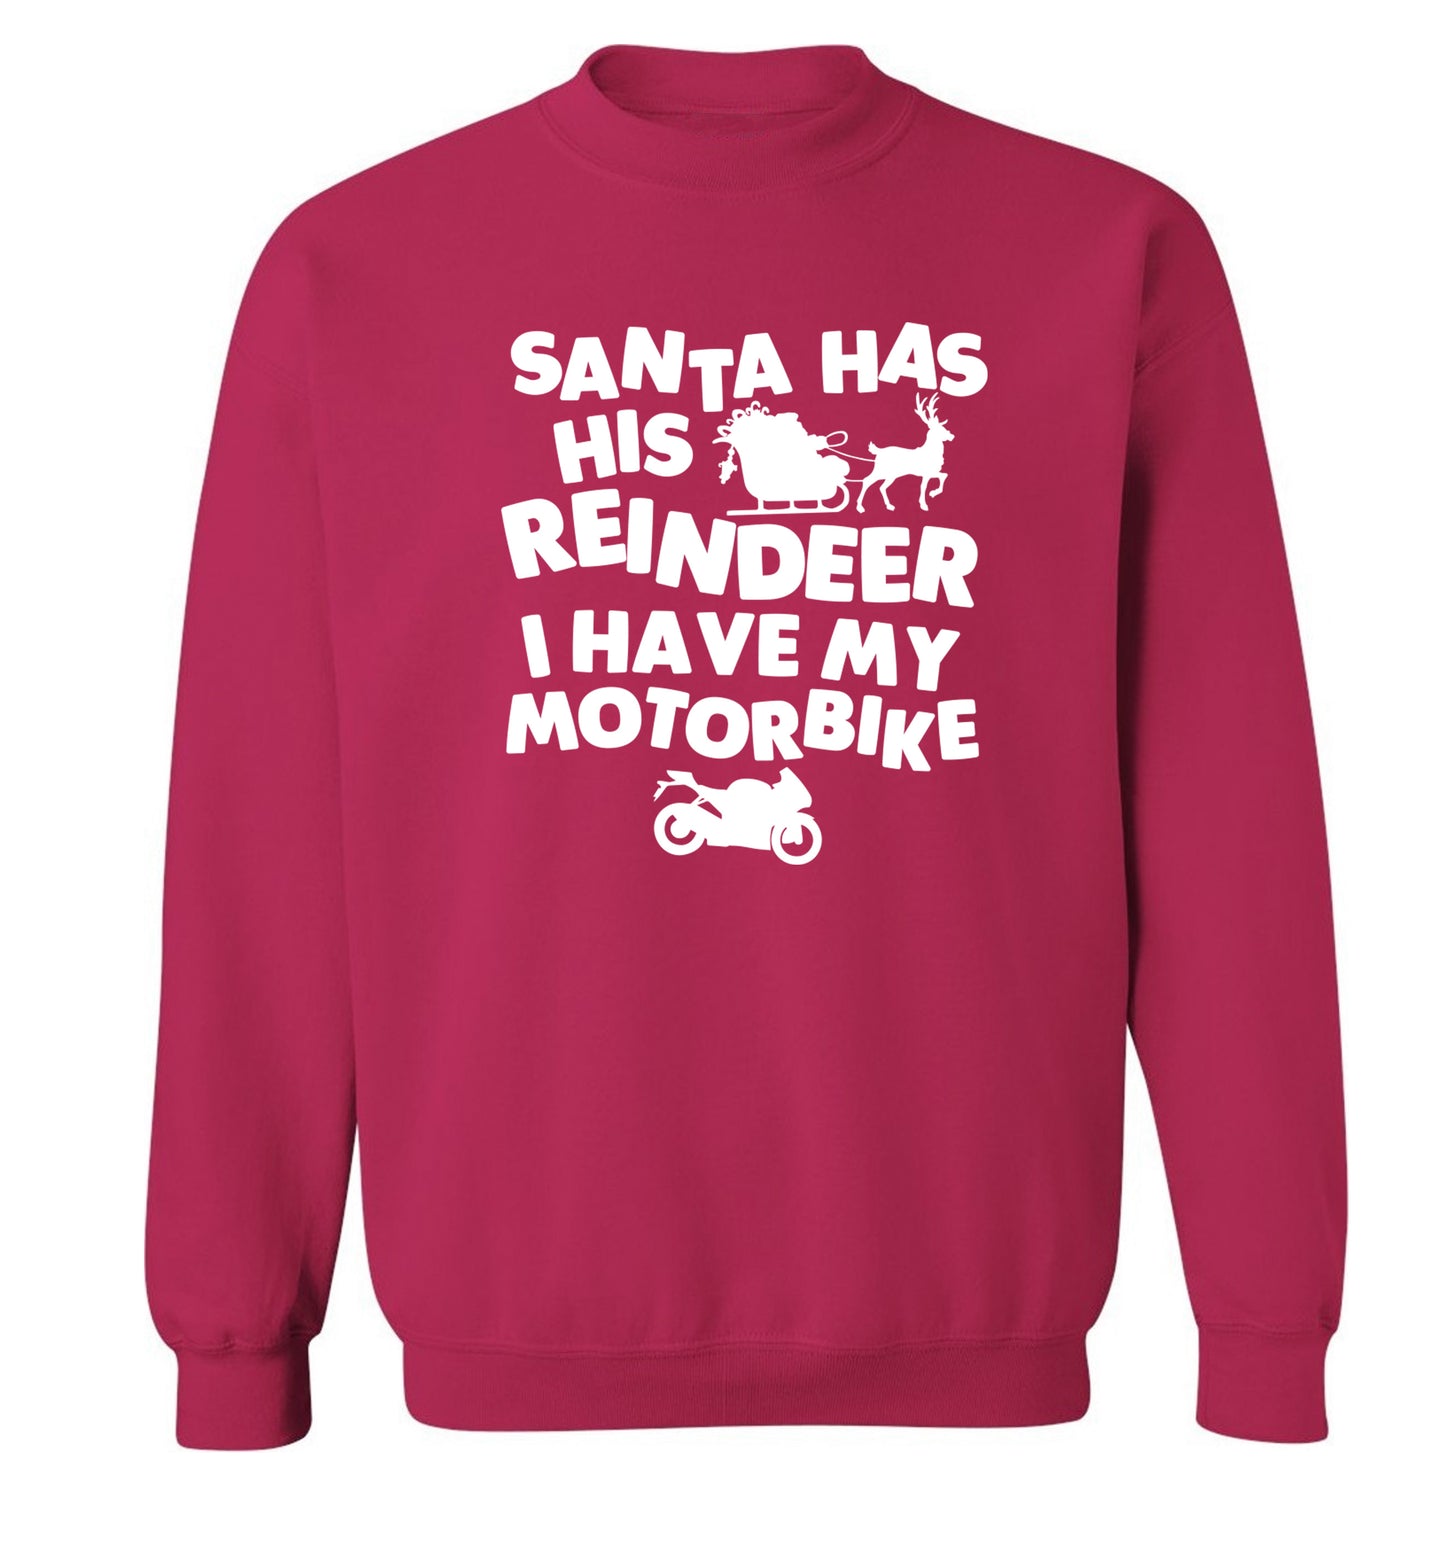 Santa has his reindeer I have my motorbike Adult's unisex pink Sweater 2XL